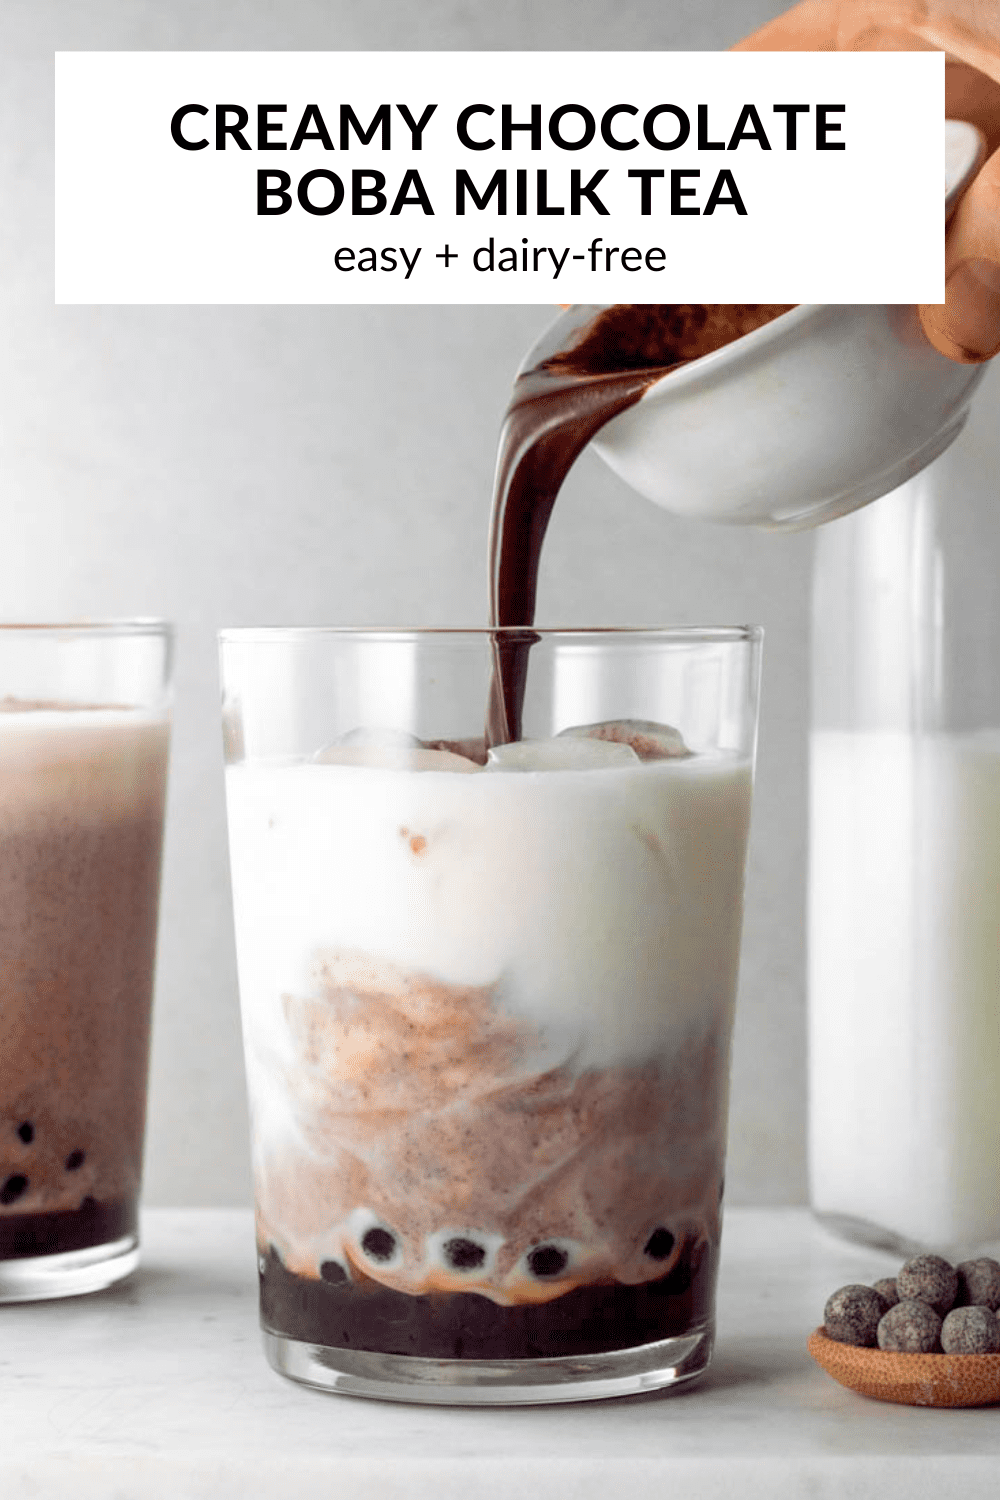 A photo of chocolate boba with text overlay "Creamy chocolate boba milk tea".